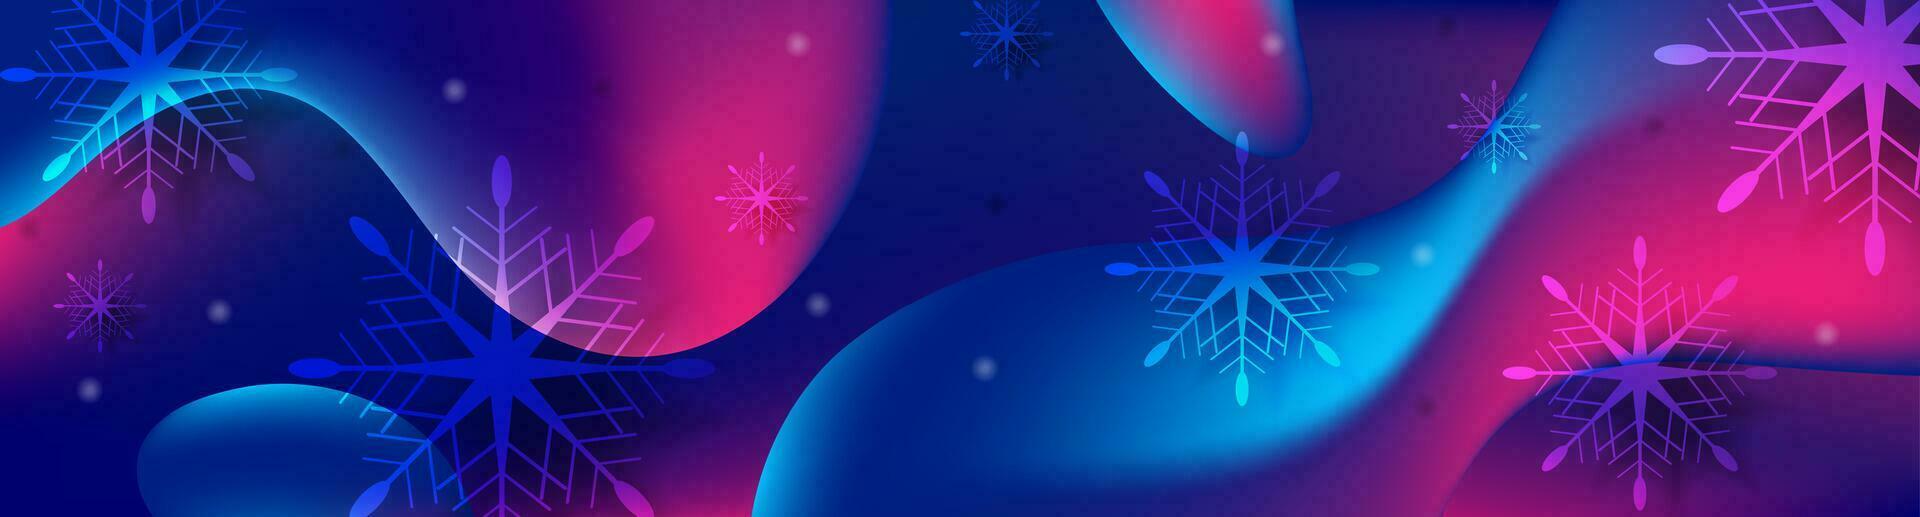 blauw Purper Kerstmis achtergrond met vloeistof golvend vormen vector